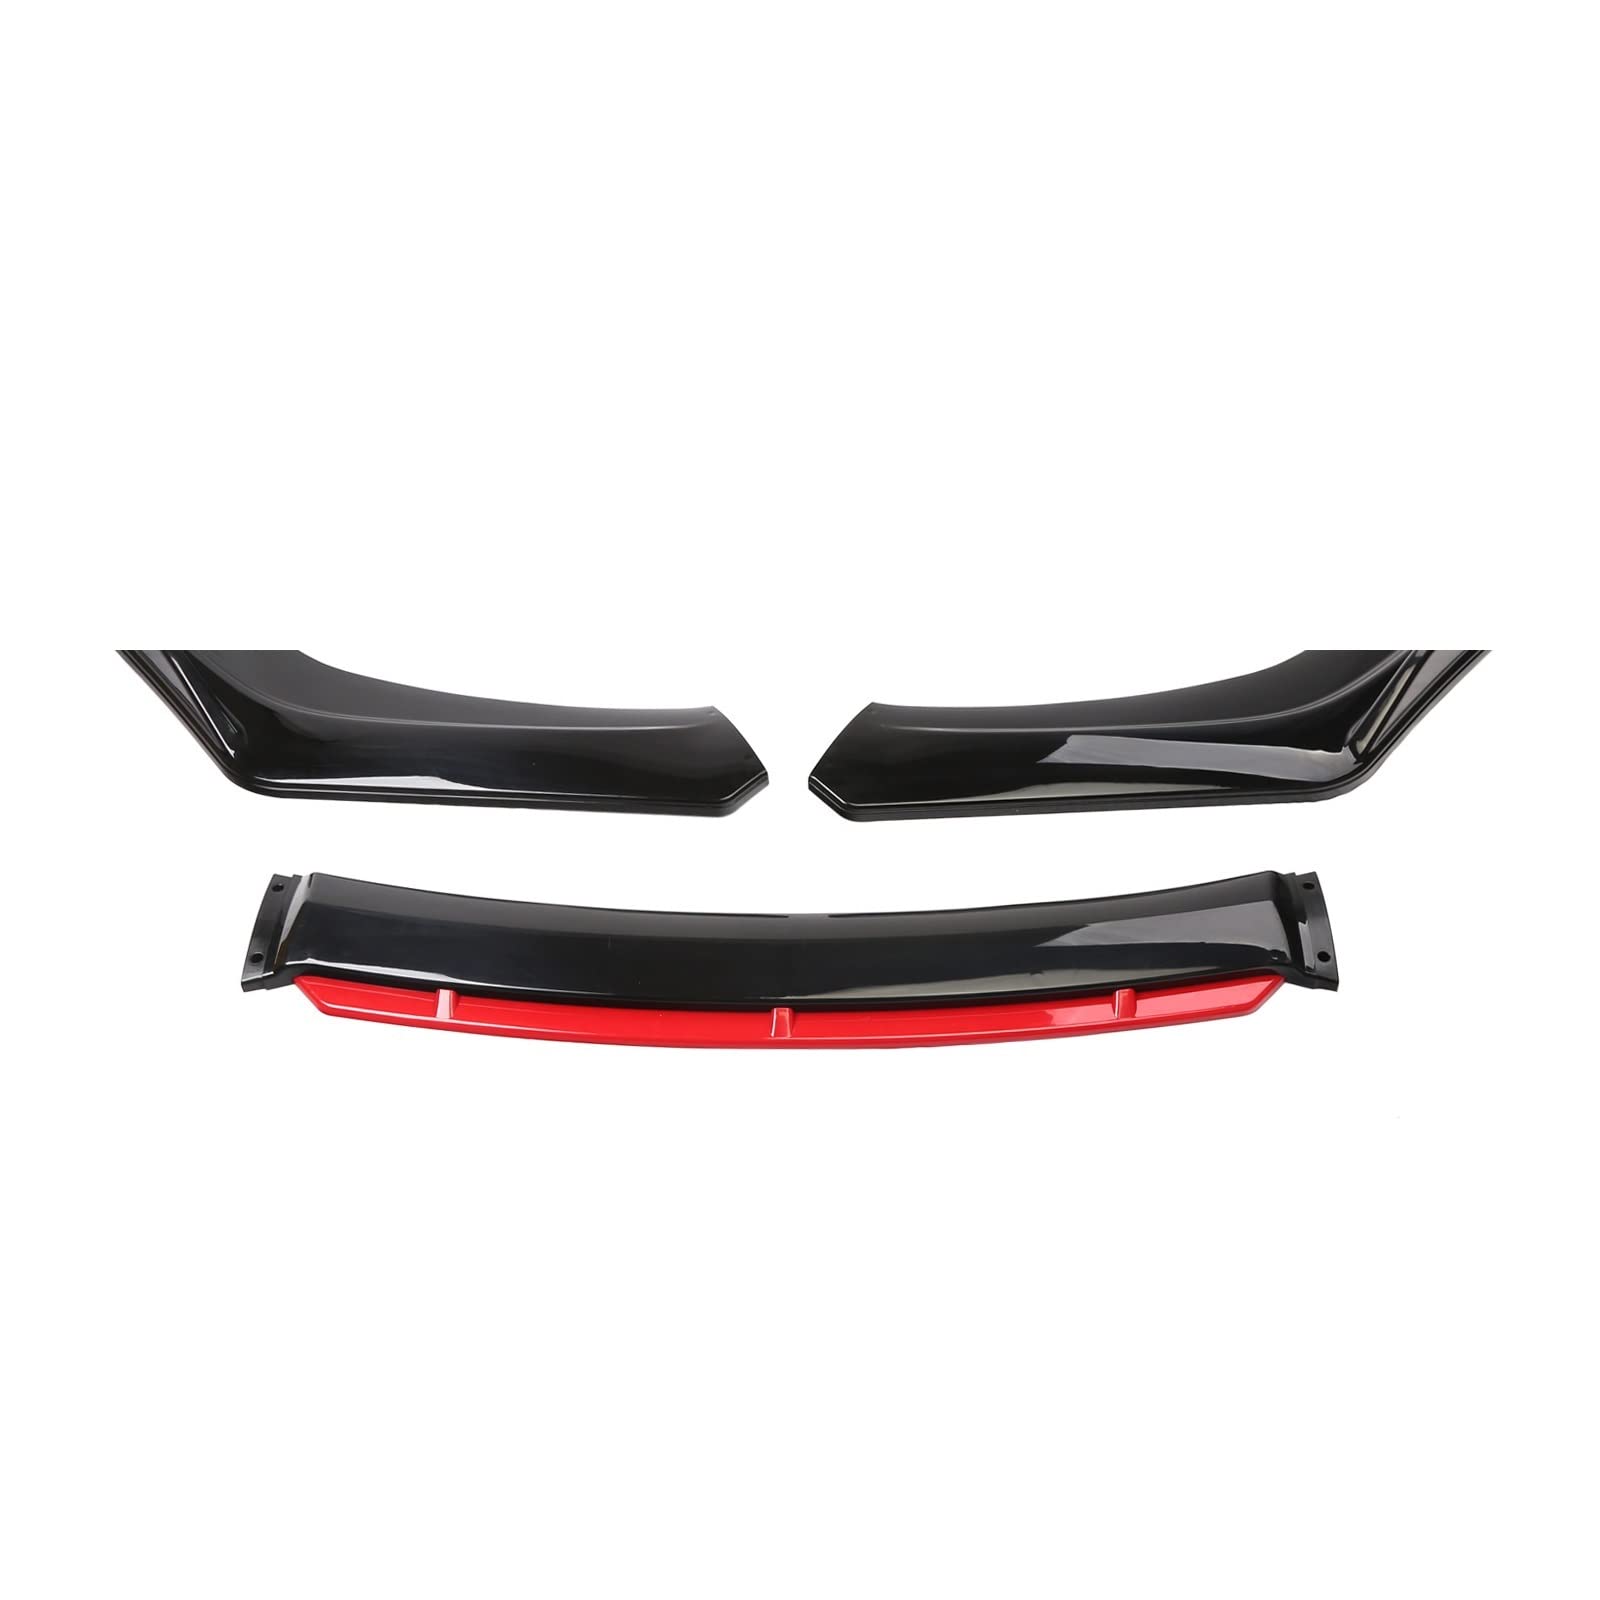 4PCS Kompatibel for Mitsubishi Lancer 2008-2015 Frontschürze Lip Spoiler Splitter Diffusor Körper Kit Deflektor Universal Auto Zubehör(Black Red) von BcoMfy